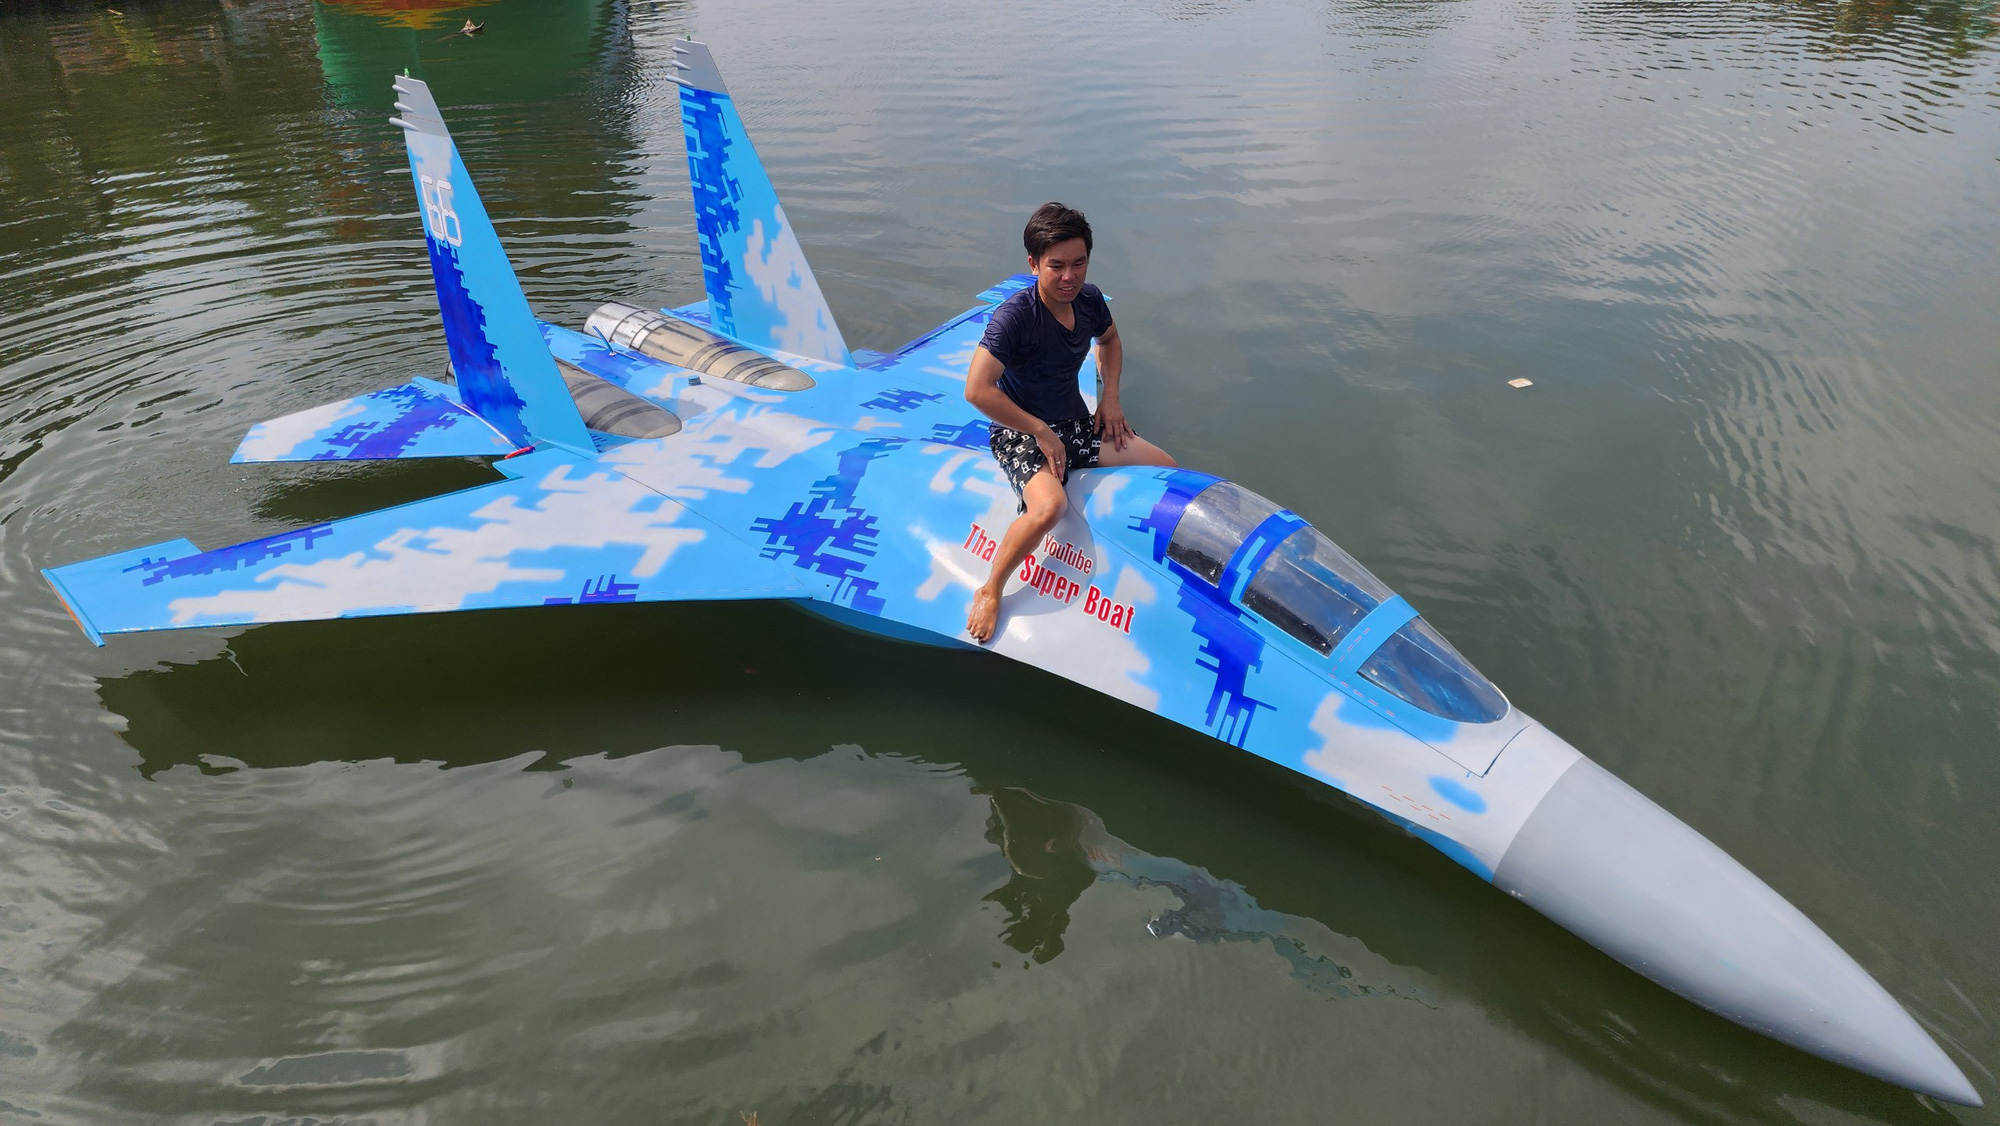 Innovative millennial designs high-speed watercraft reminiscent of Su-35 fighter in southern Vietnam